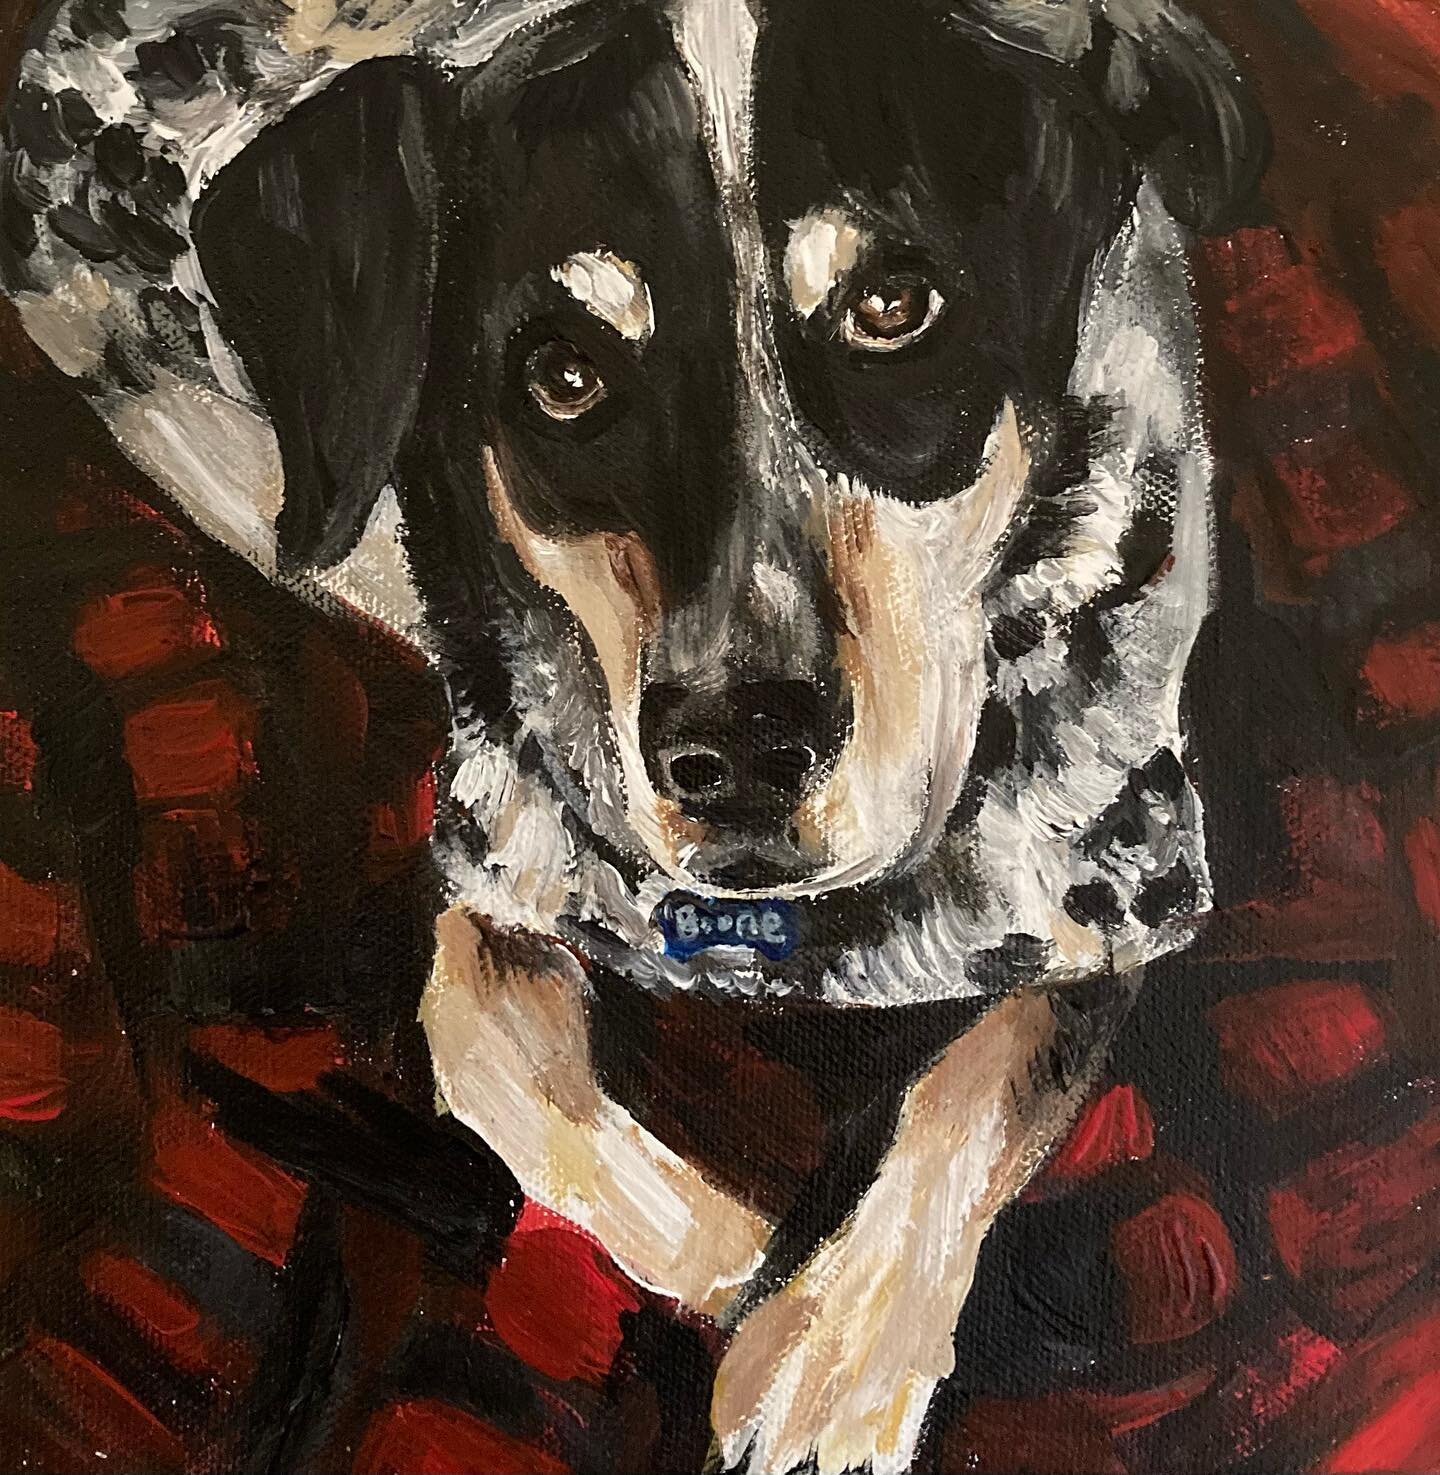 Boone 
8x8 acrylic on canvas
#dogsofinstagram #dogs #dog #dogpainting #dogportrait